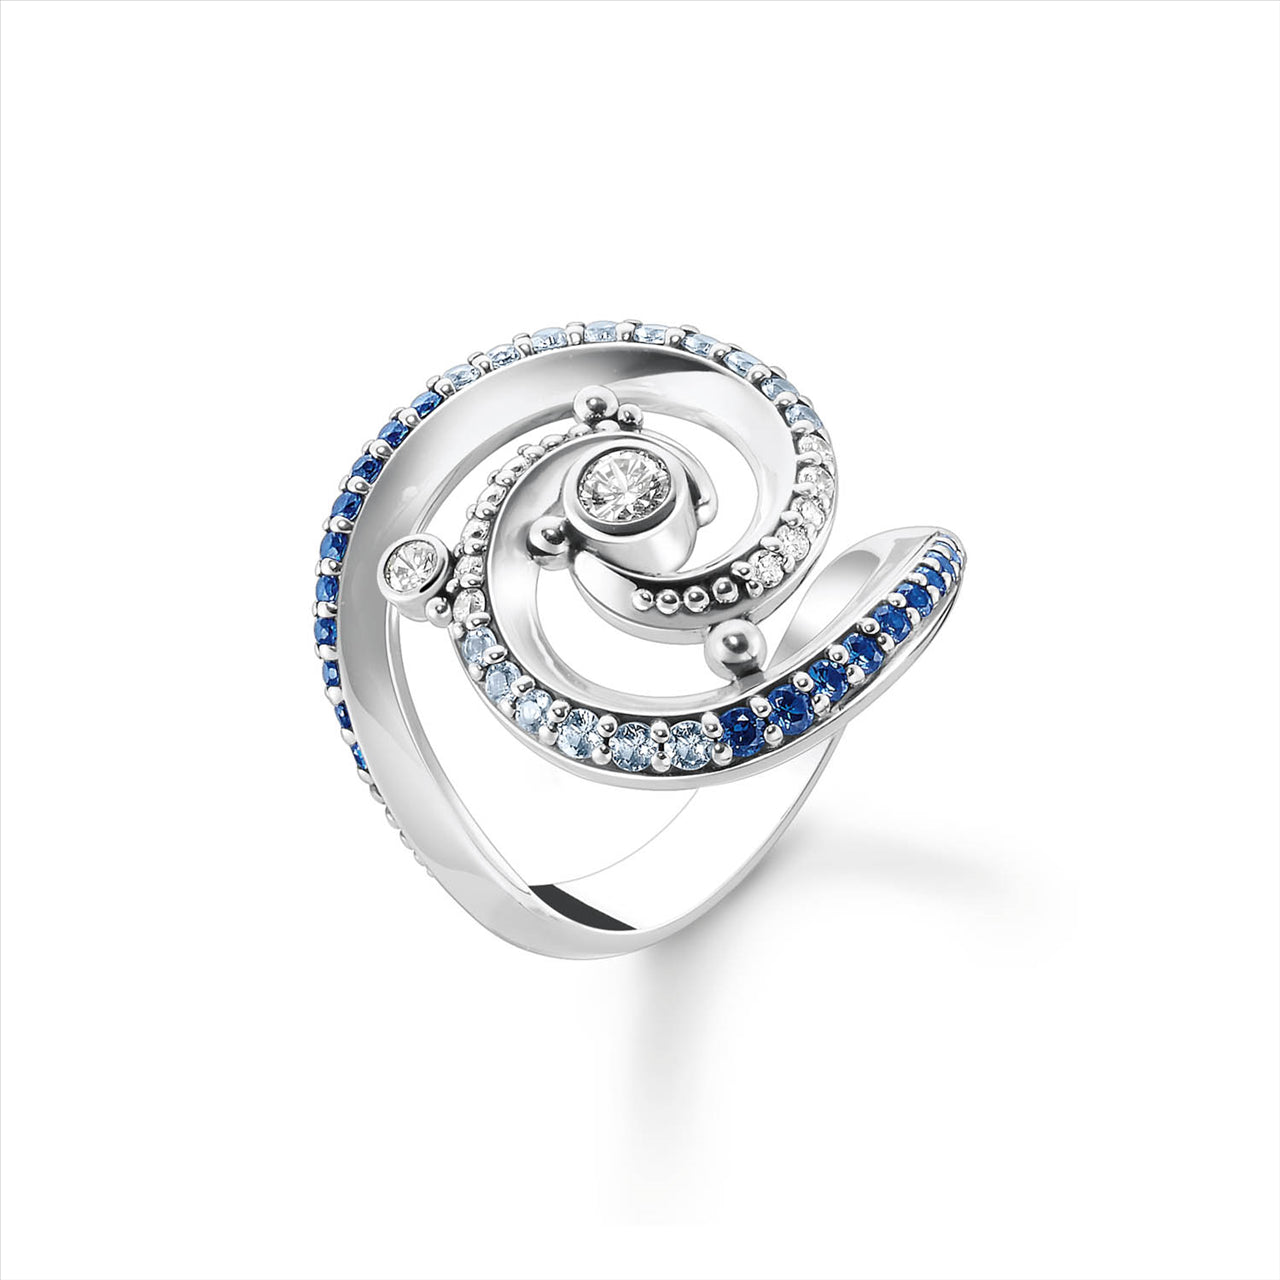 Thomas Sabo "Wave" Blue Stone Ring